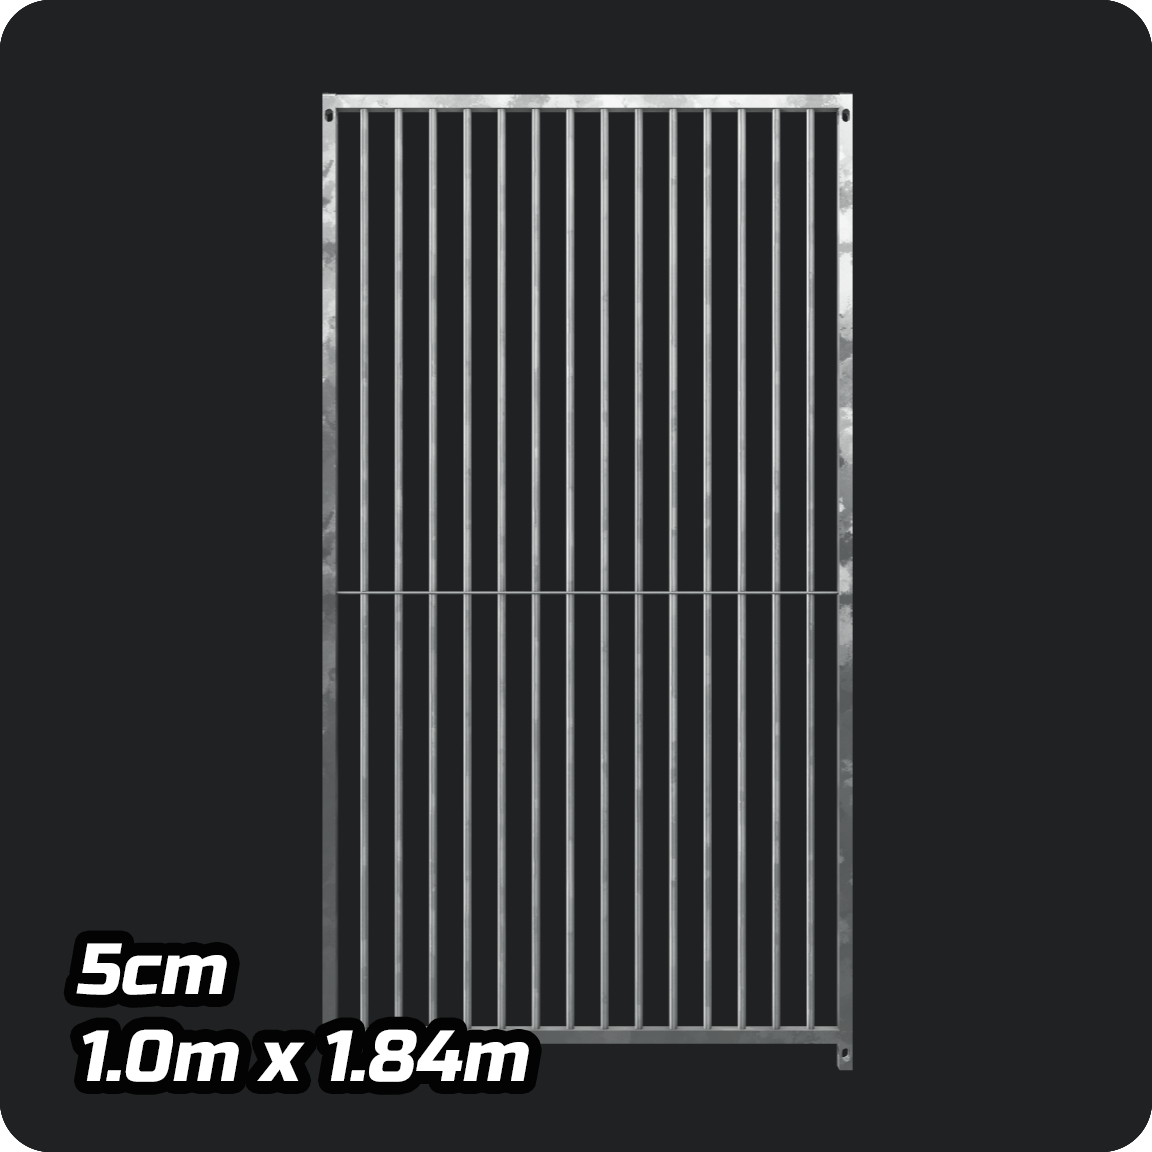 1m x 1.84m - Heavy duty Premium Galvanized - 5cm Gap Panels